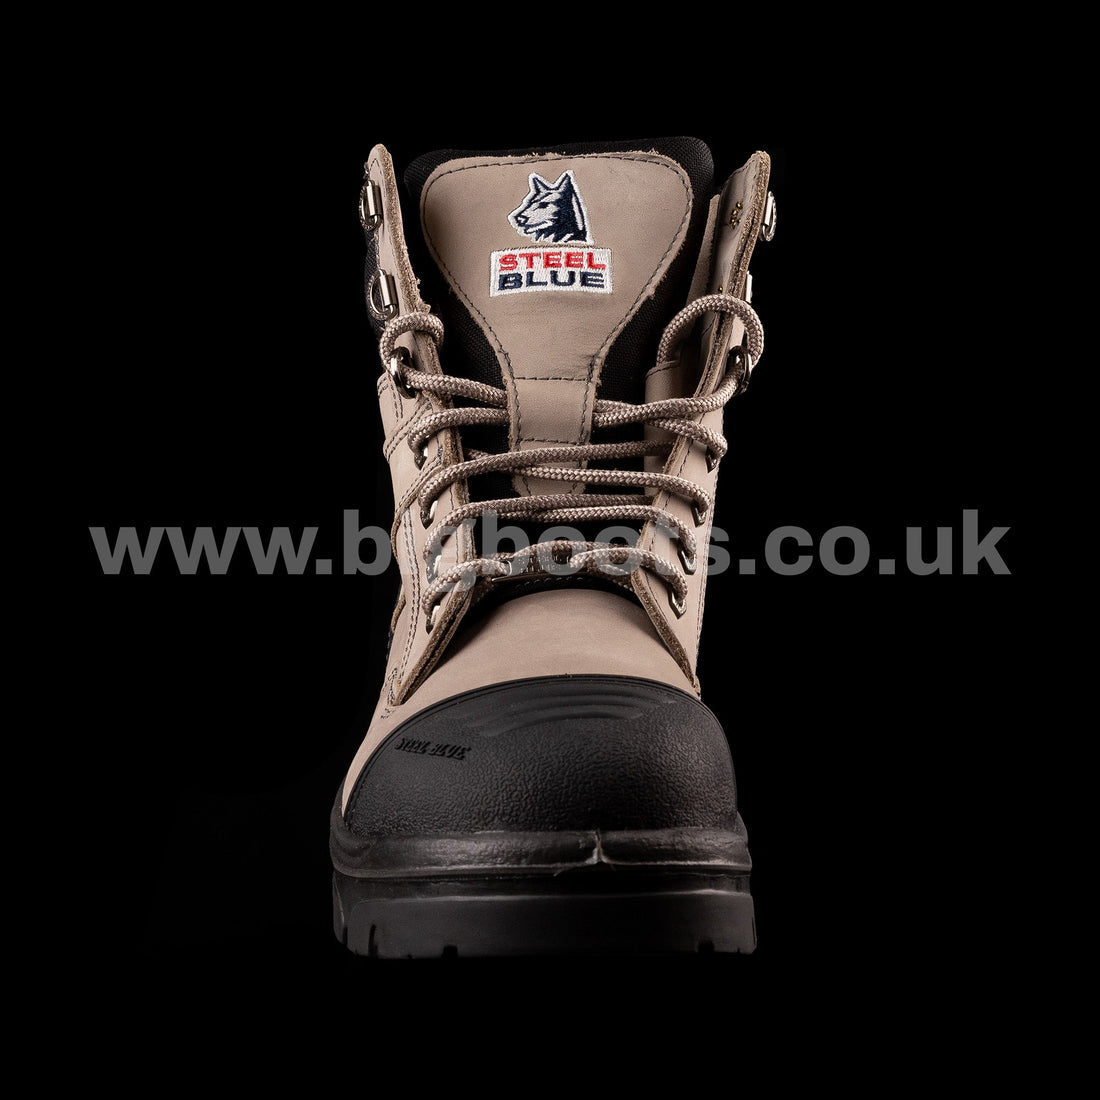 Steel Blue Mens Work Boots Southern Cross Zip S3 - SLATE - BIG Boots UK